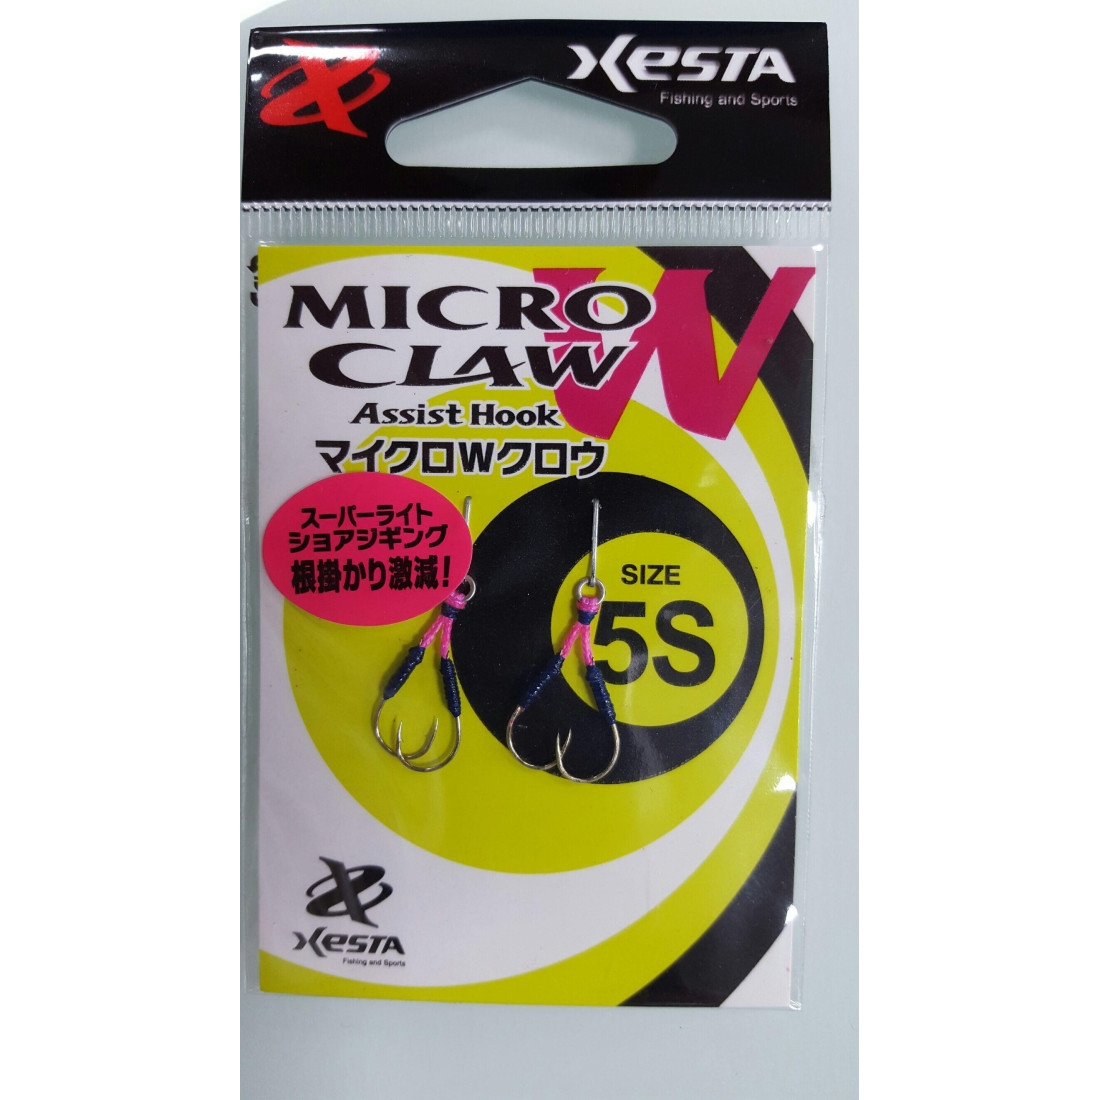 6054 Xesta Micro Claw Single Assist Hooks Size 5S 